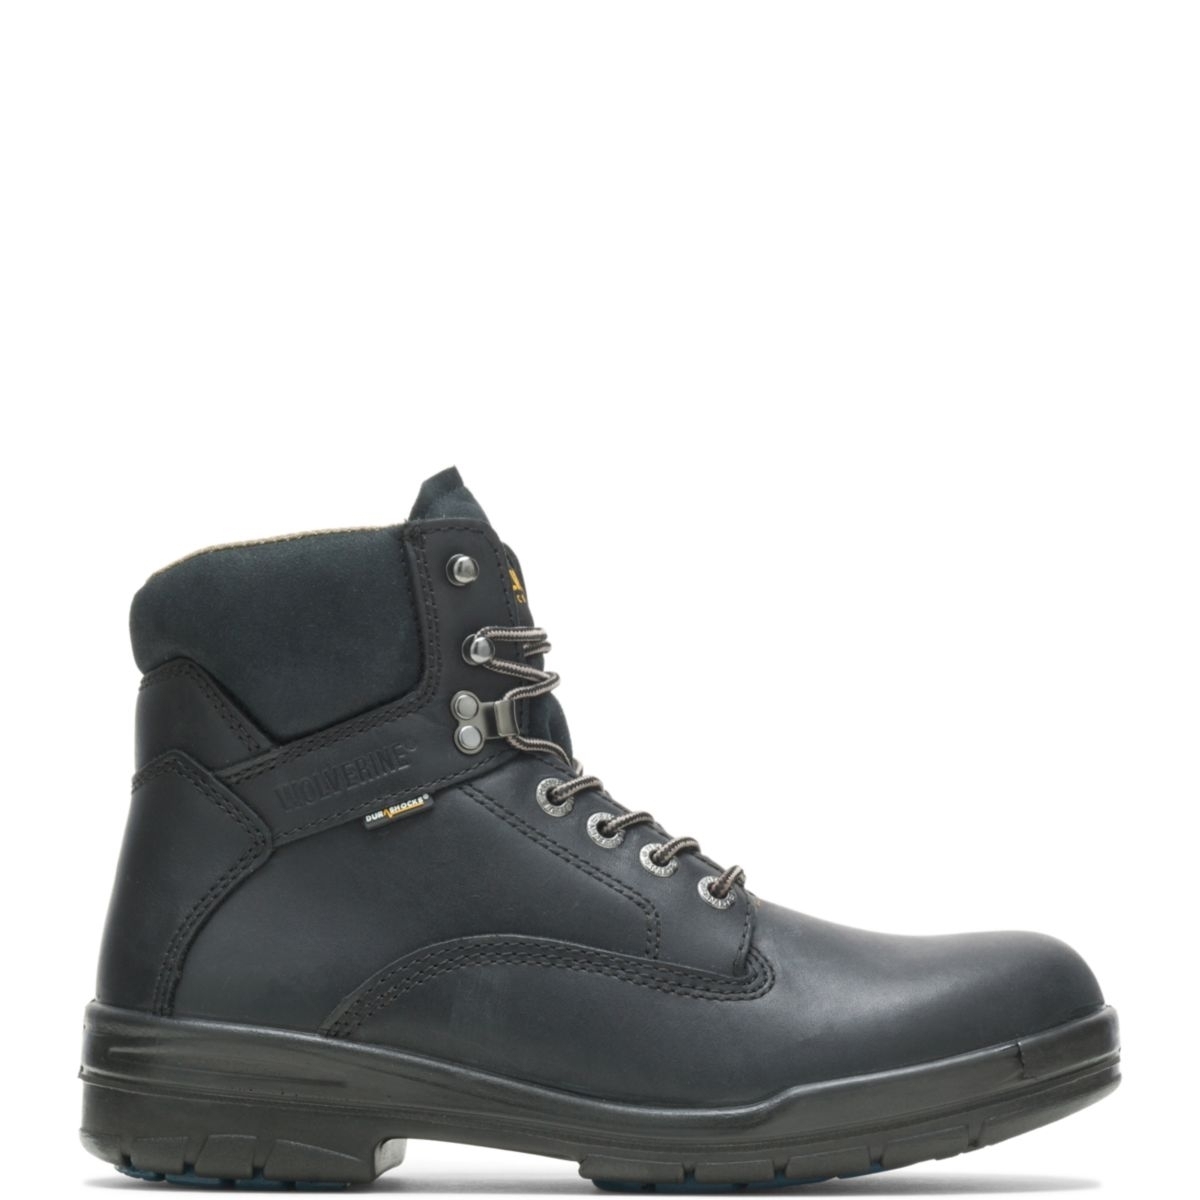 WOLVERINE Men's 6 DuraShocksÂ® Slip Resistant Direct-Attached Lined Soft Toe Work Boot Black - W03123 14 WIDE BLACK - BLACK, 13 WIDE